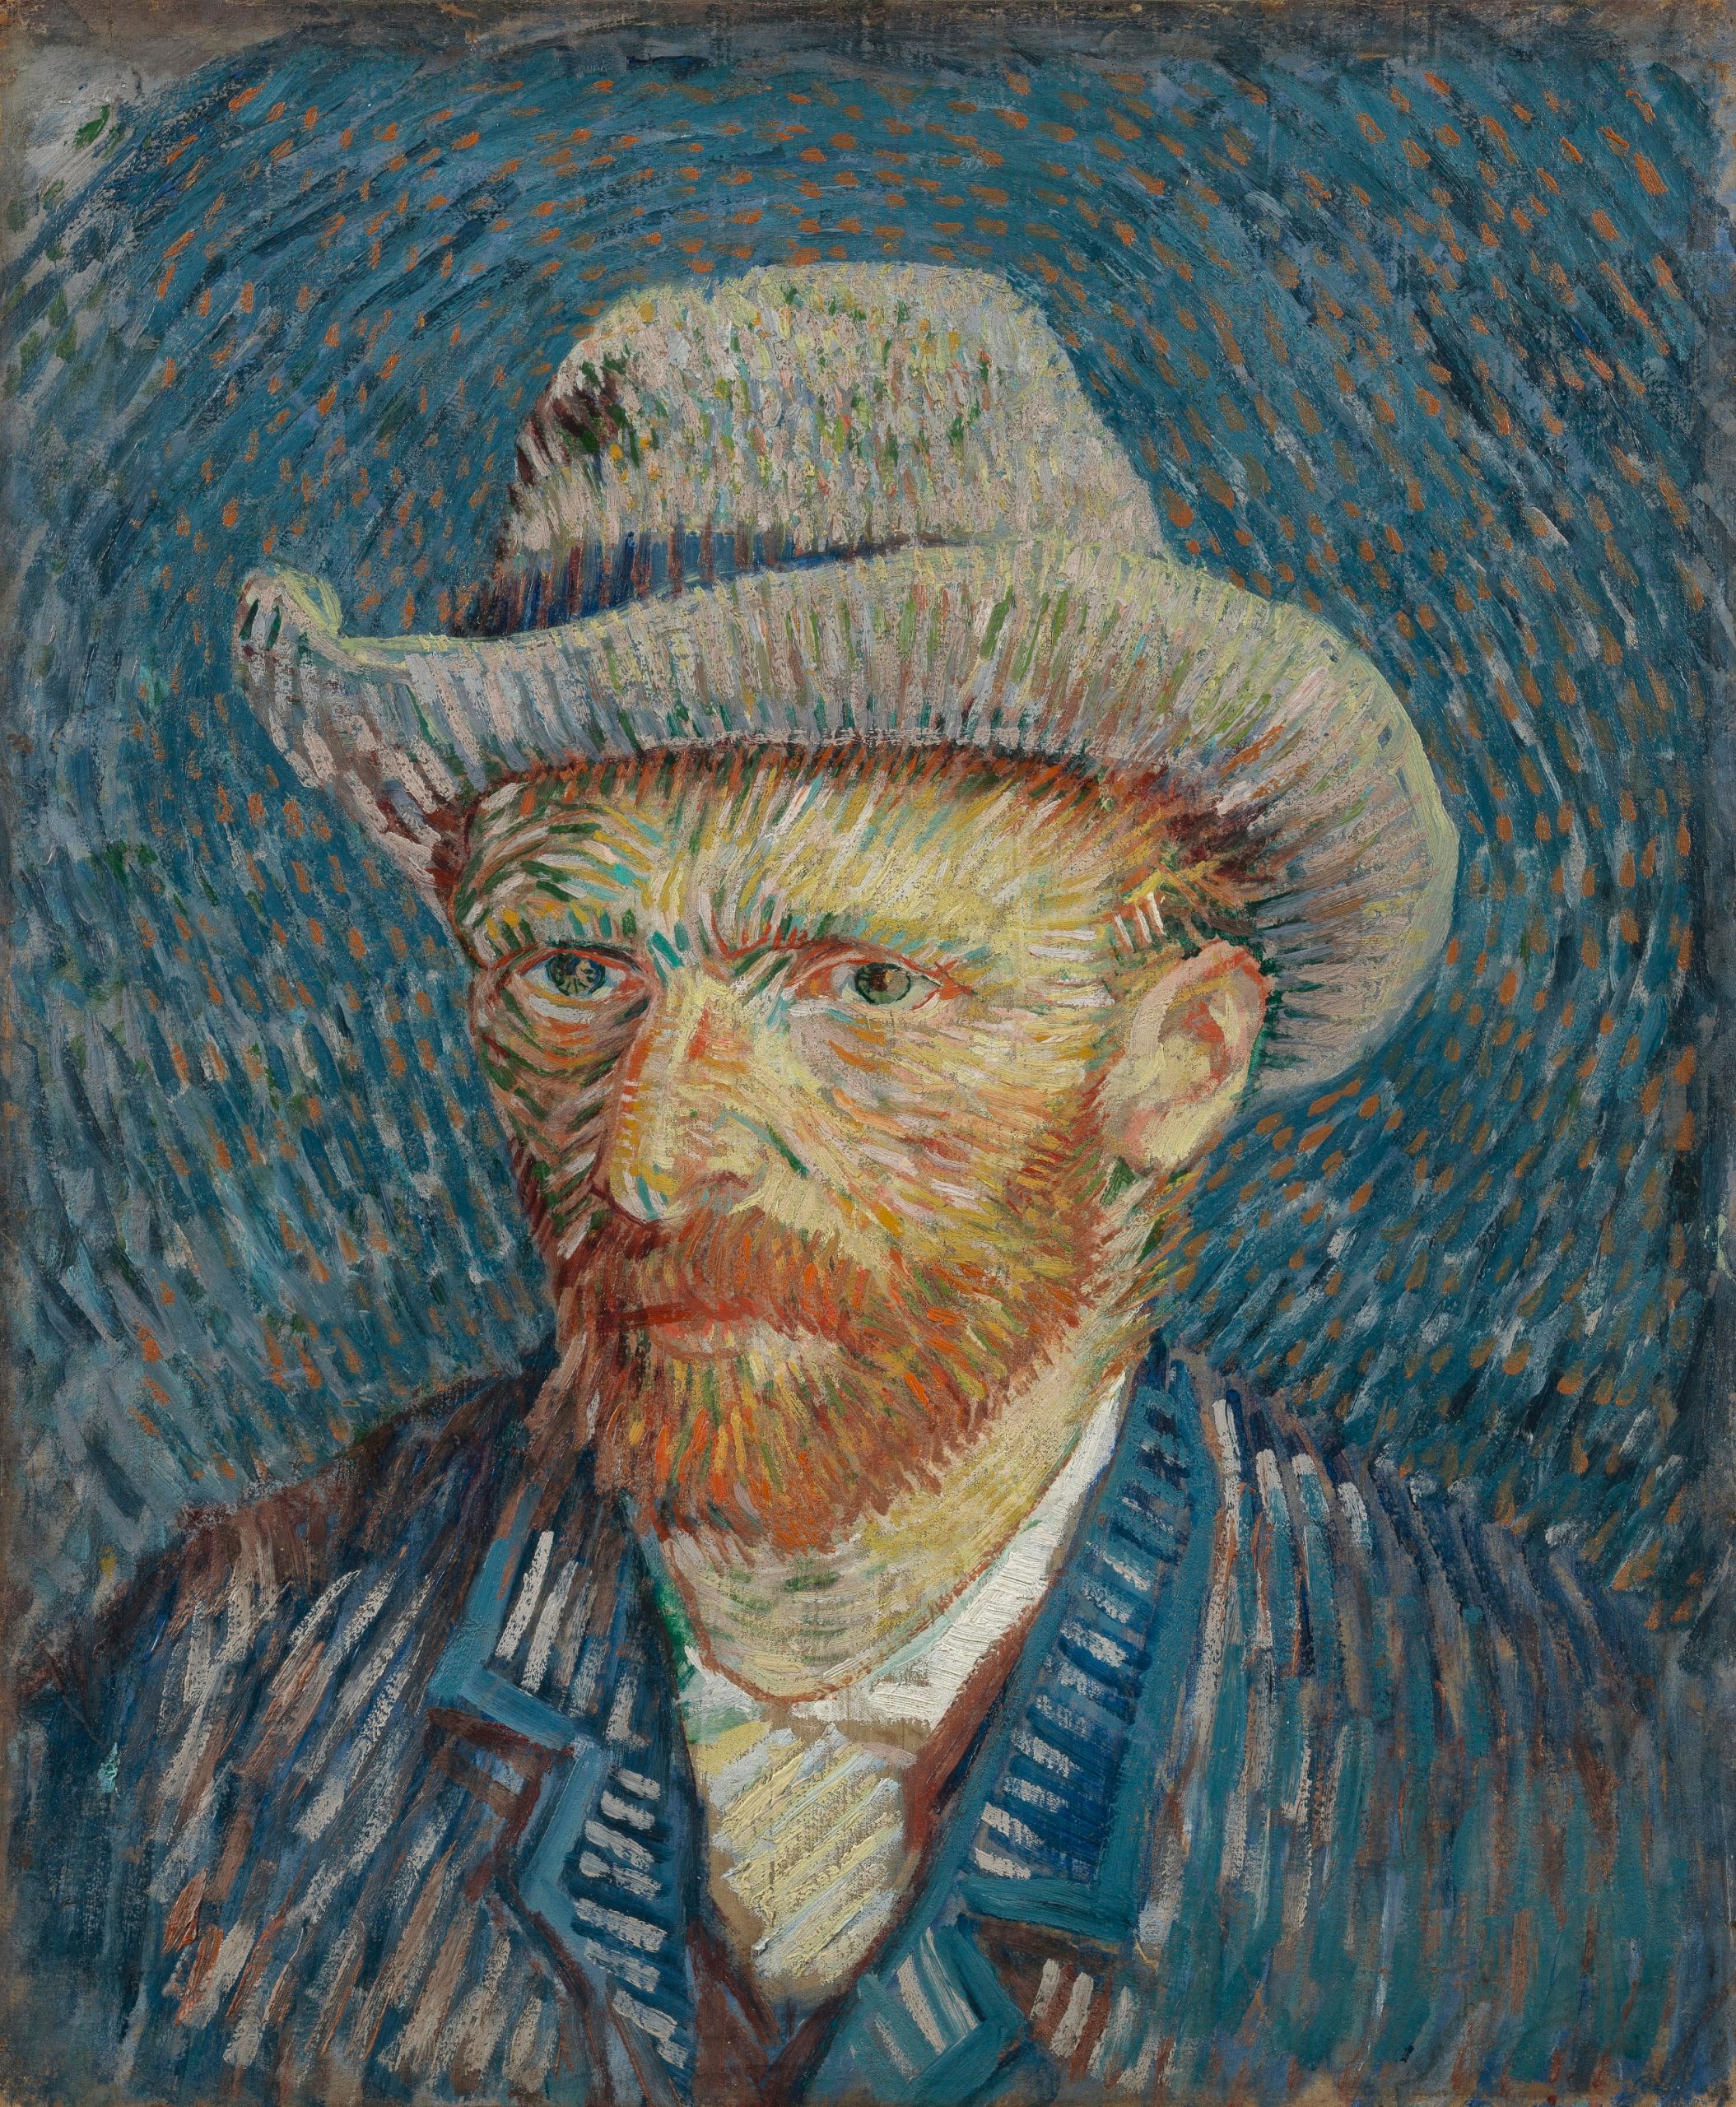 Vincent van Gogh wallpaper, self portraits, oil painting, creativity